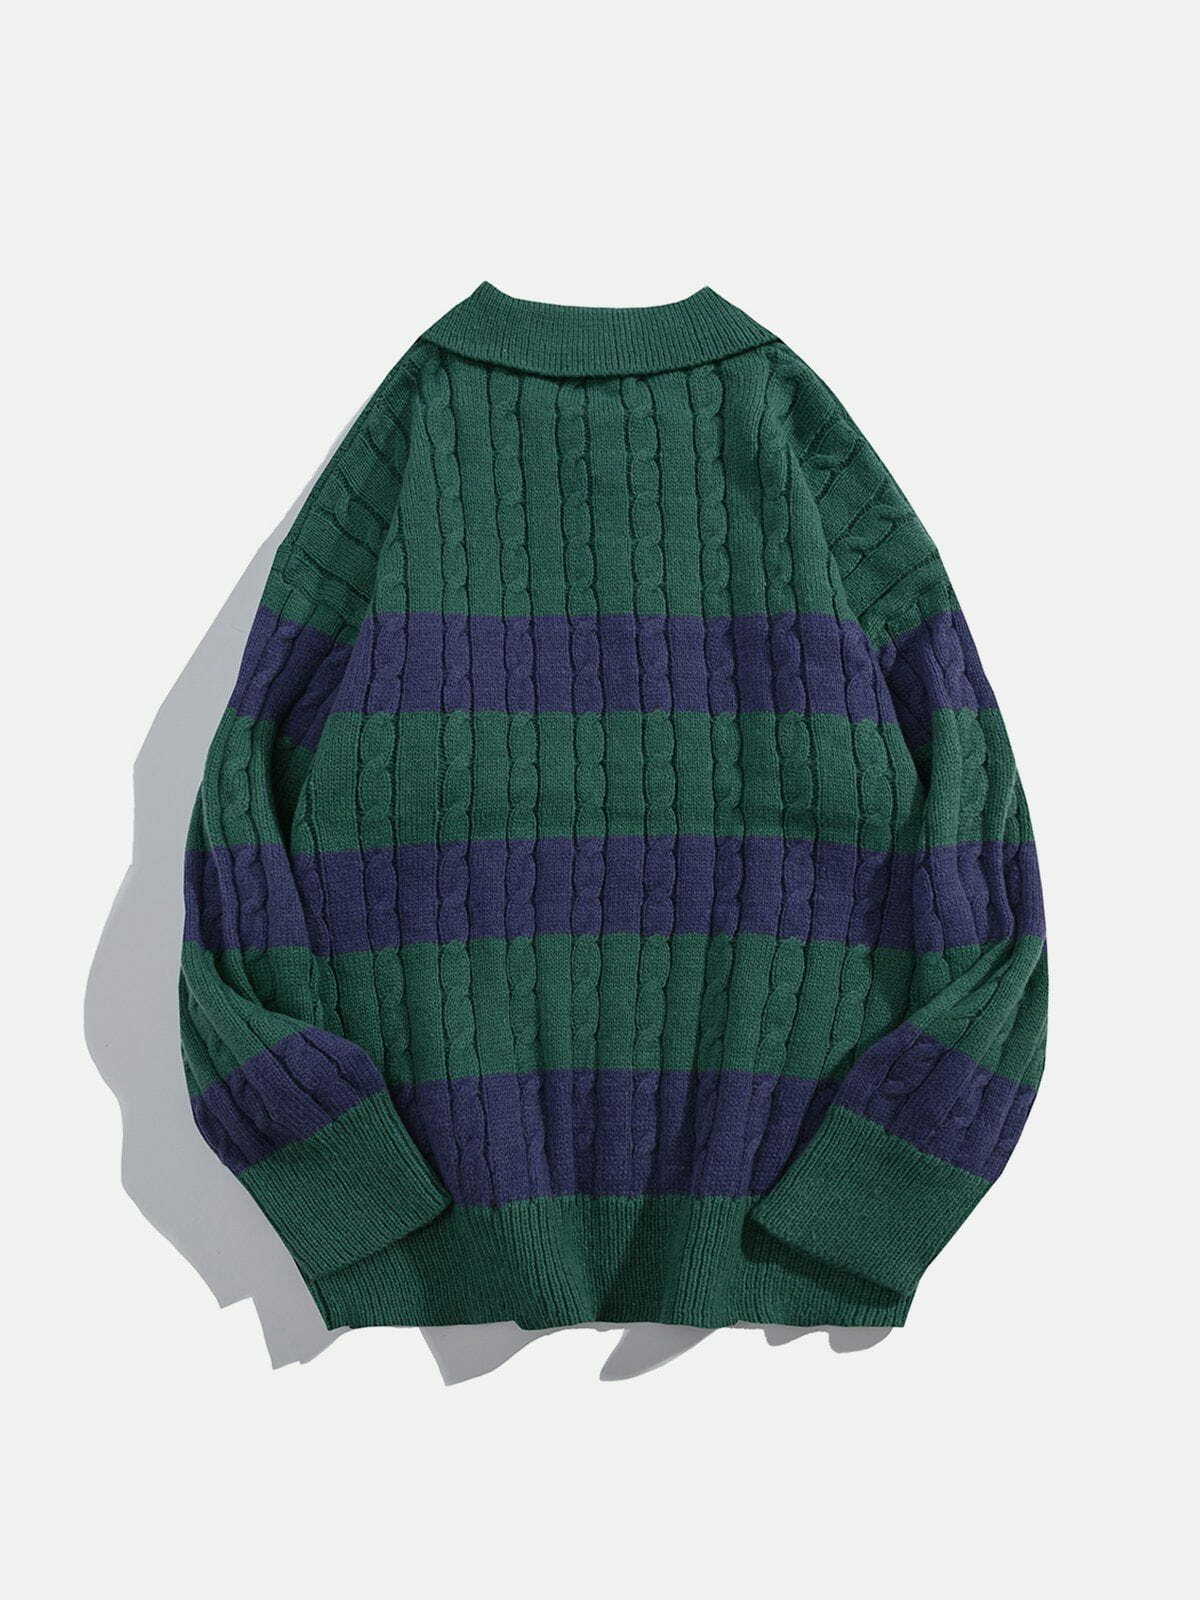 dynamic stripe polo sweater youthful & stylish streetwear 5293